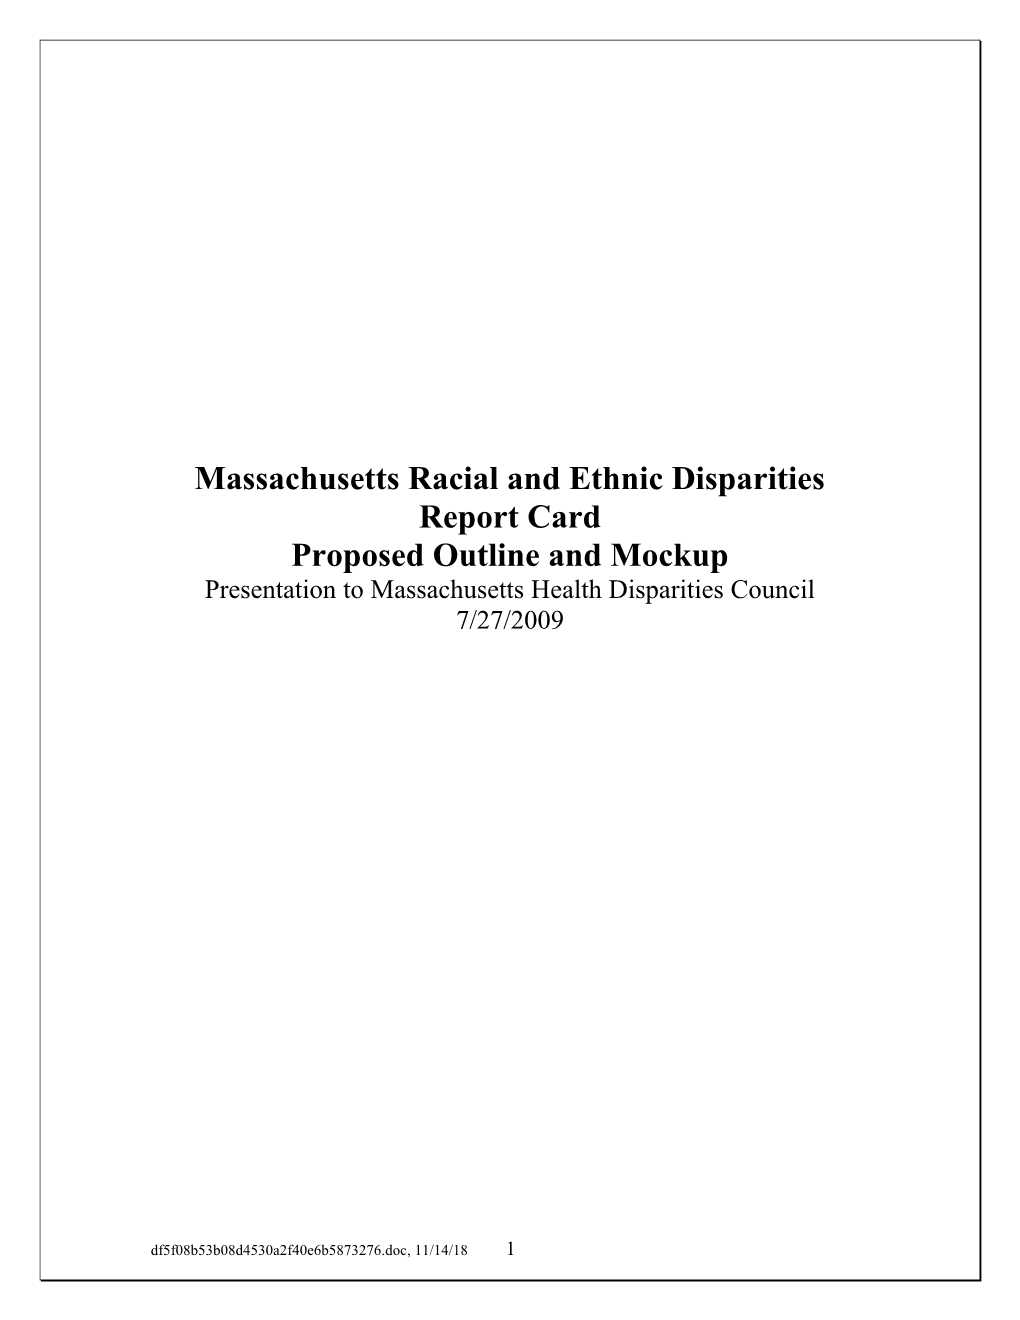 Massachusetts Racial and Ethnic Disparities Report Card